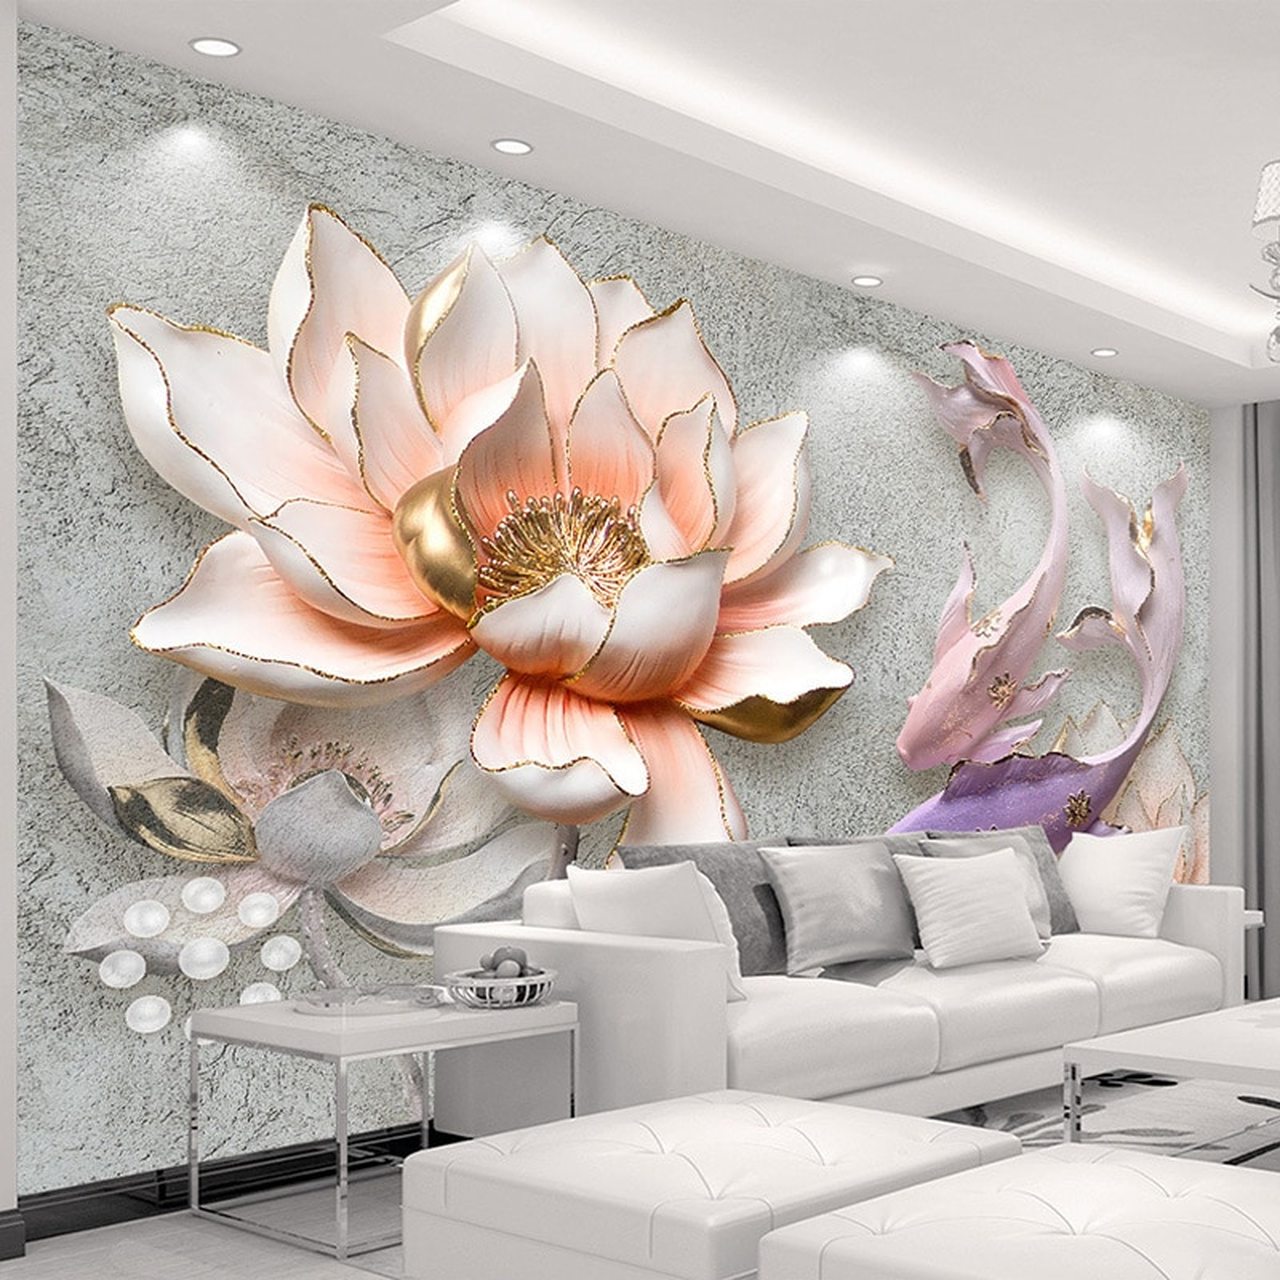 3d lotus live wallpaper,wallpaper,wall,mural,living room,room